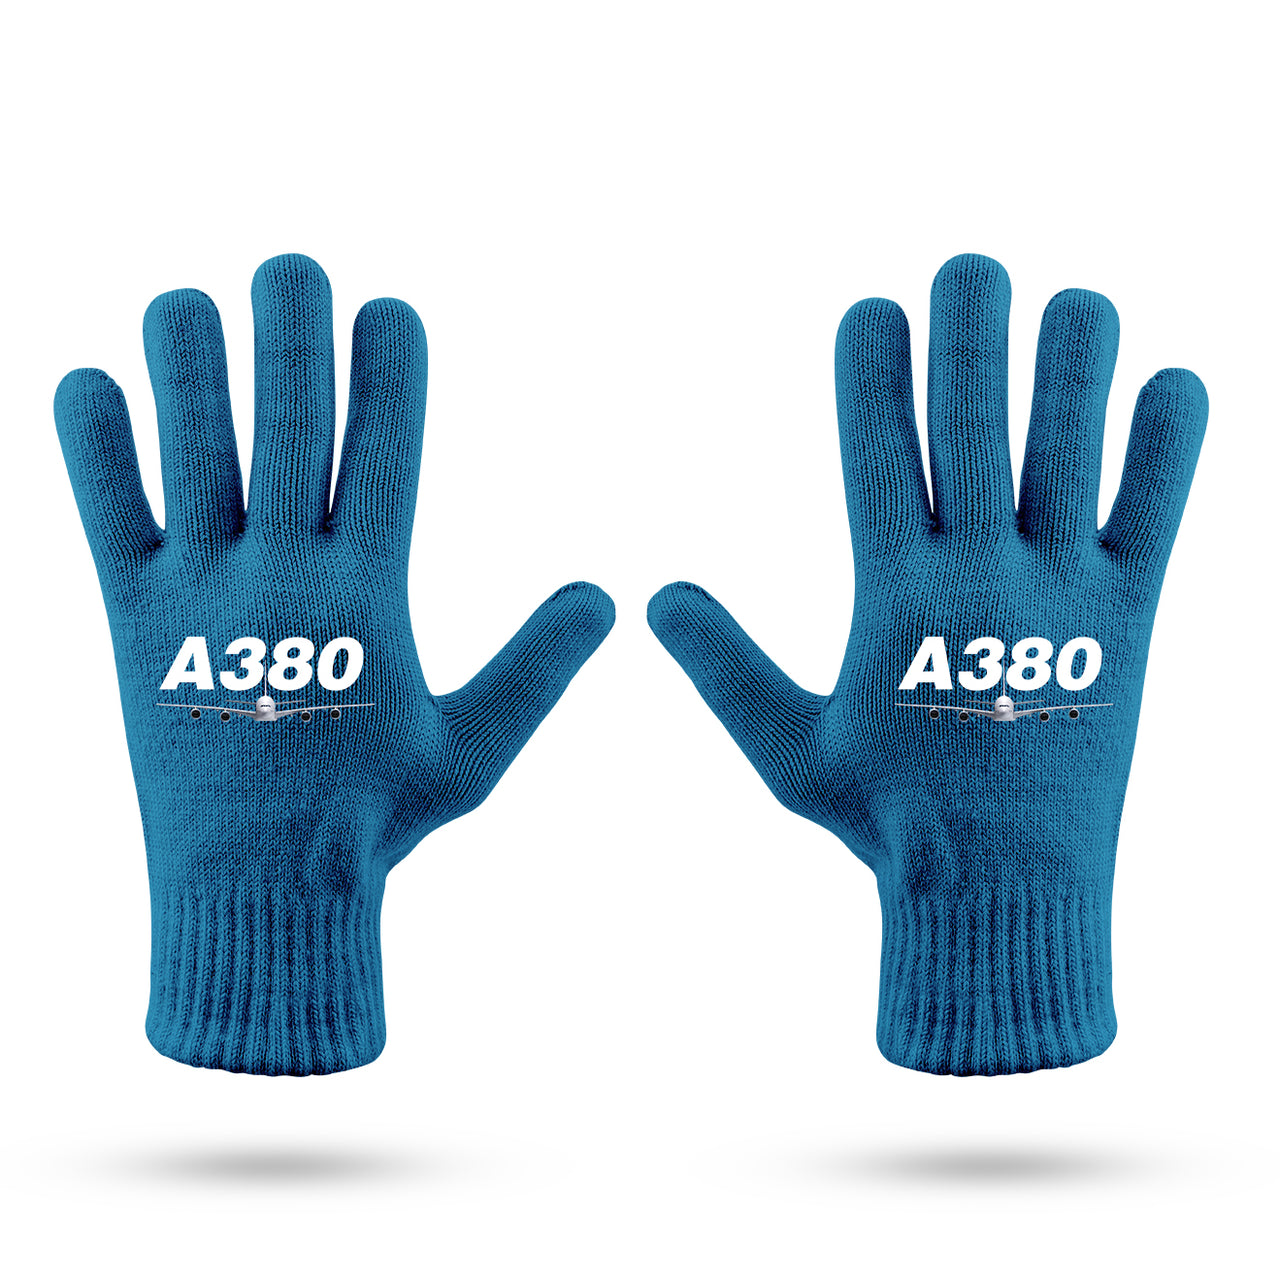 Super Airbus A380 Designed Gloves